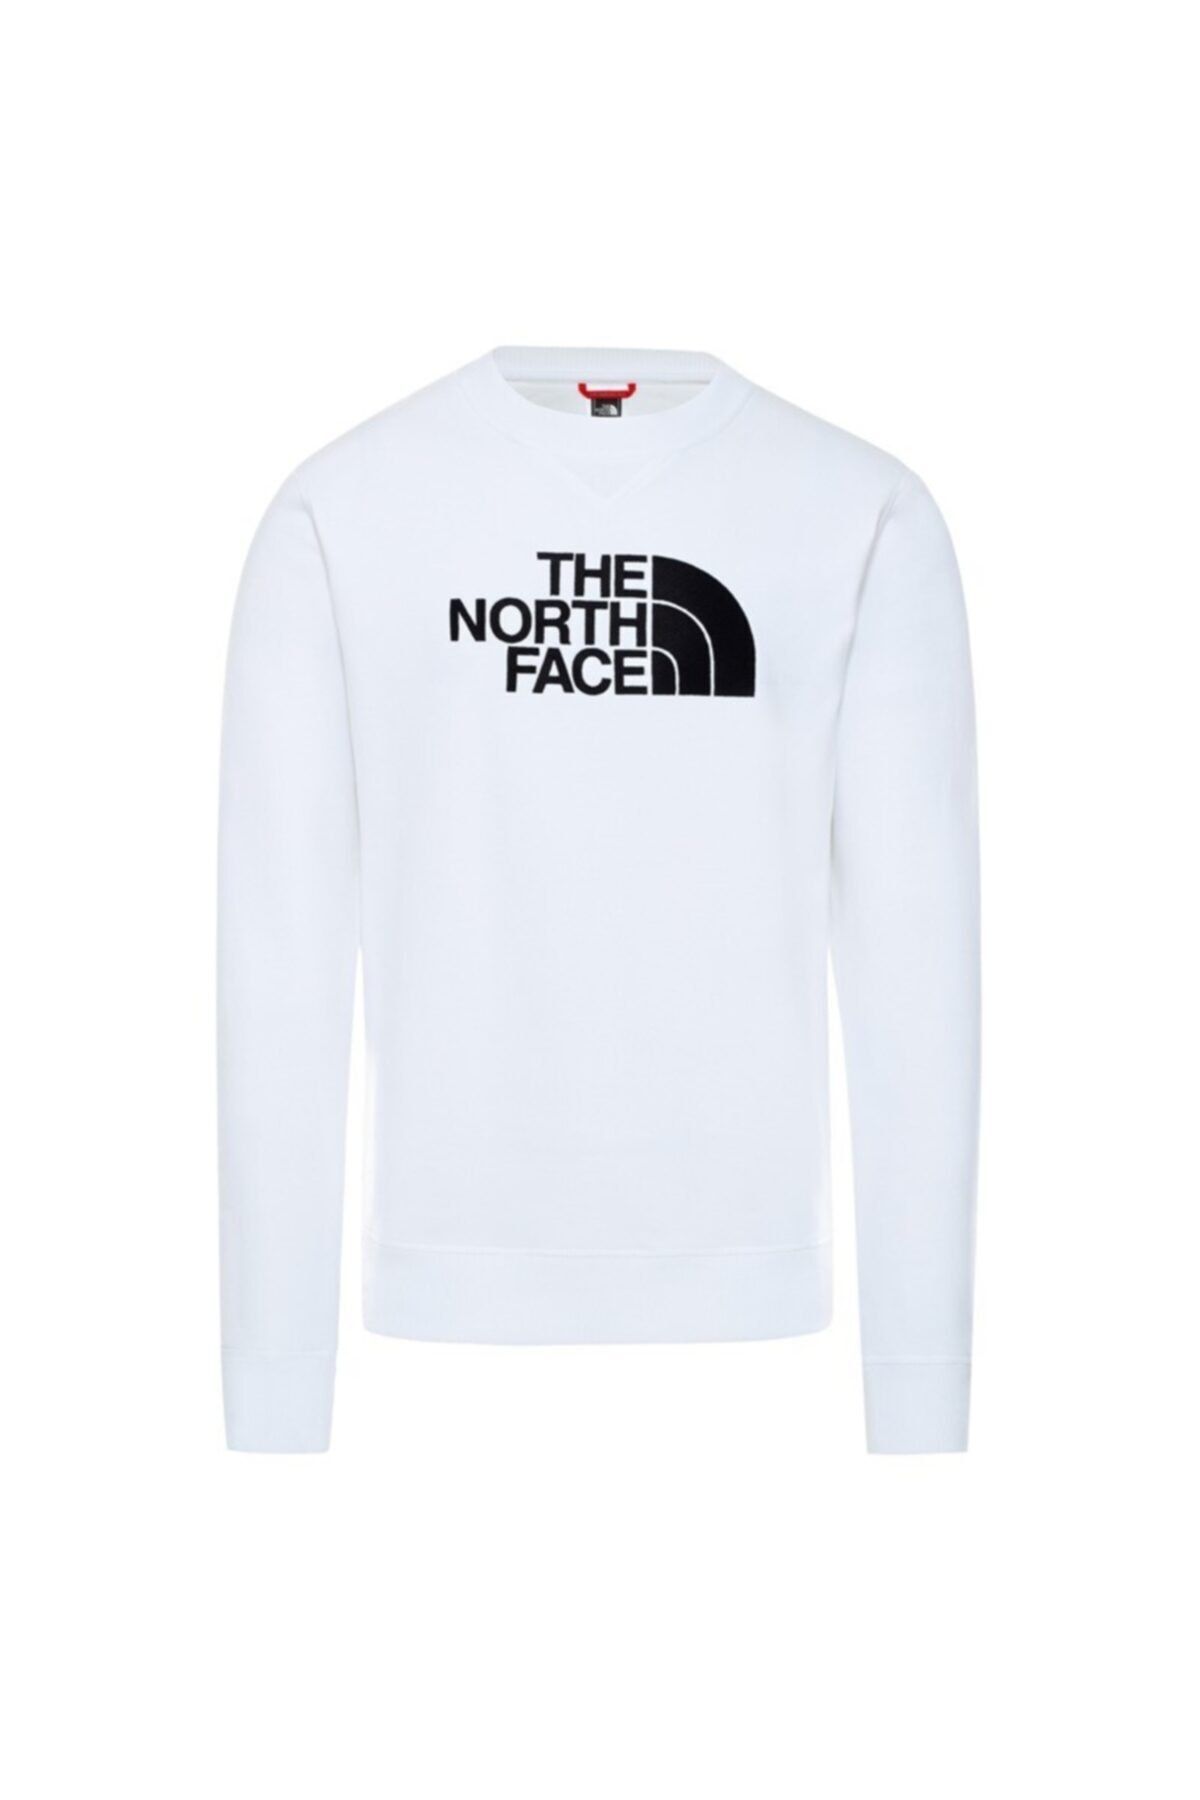 The North Face Erkek Sweatshirt Drew Peak Crew Nf0a4svrla91